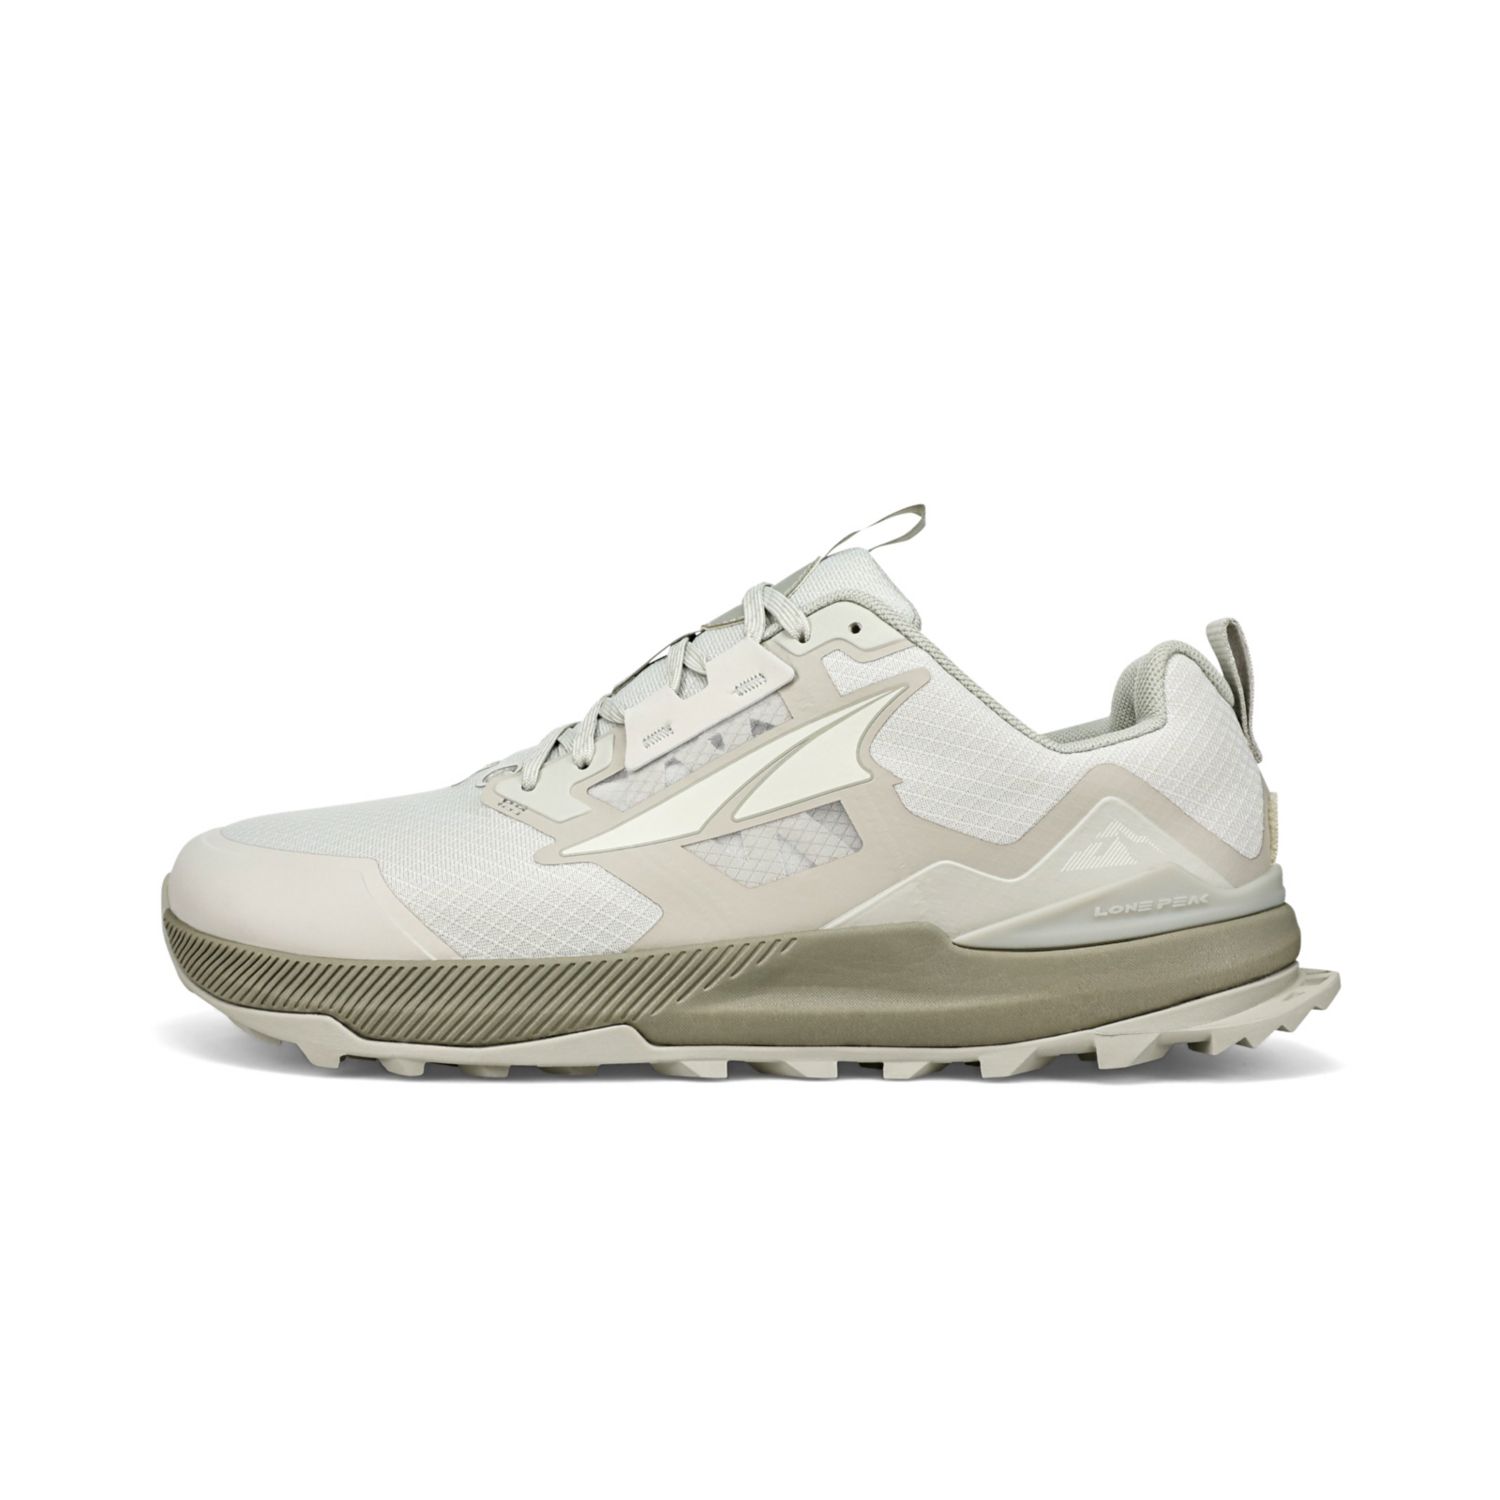 Grey Brown Men's Altra Lone Peak 7 Trail Running Shoes | UAE-41506399